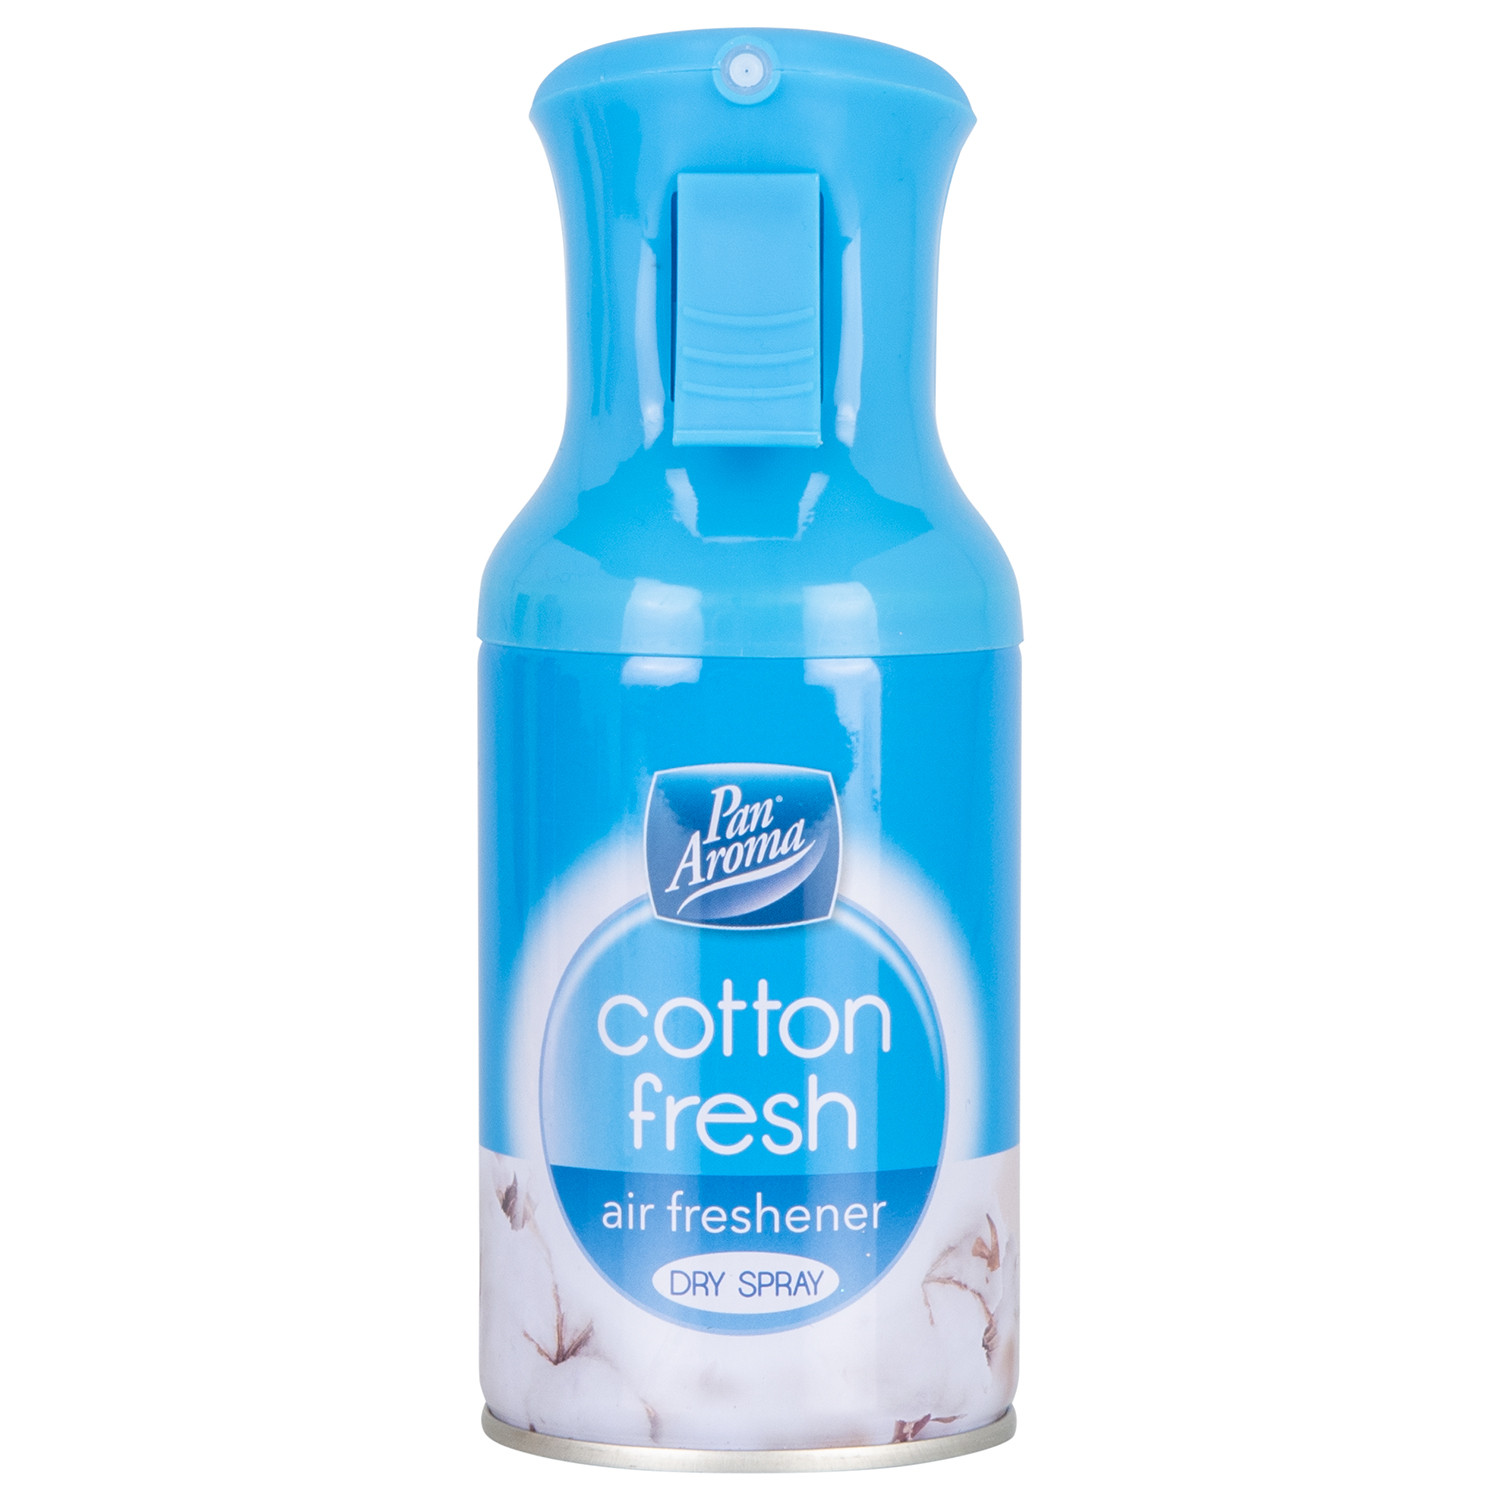 Pan Aroma Cotton Fresh Air Freshener Spray 250ml Image